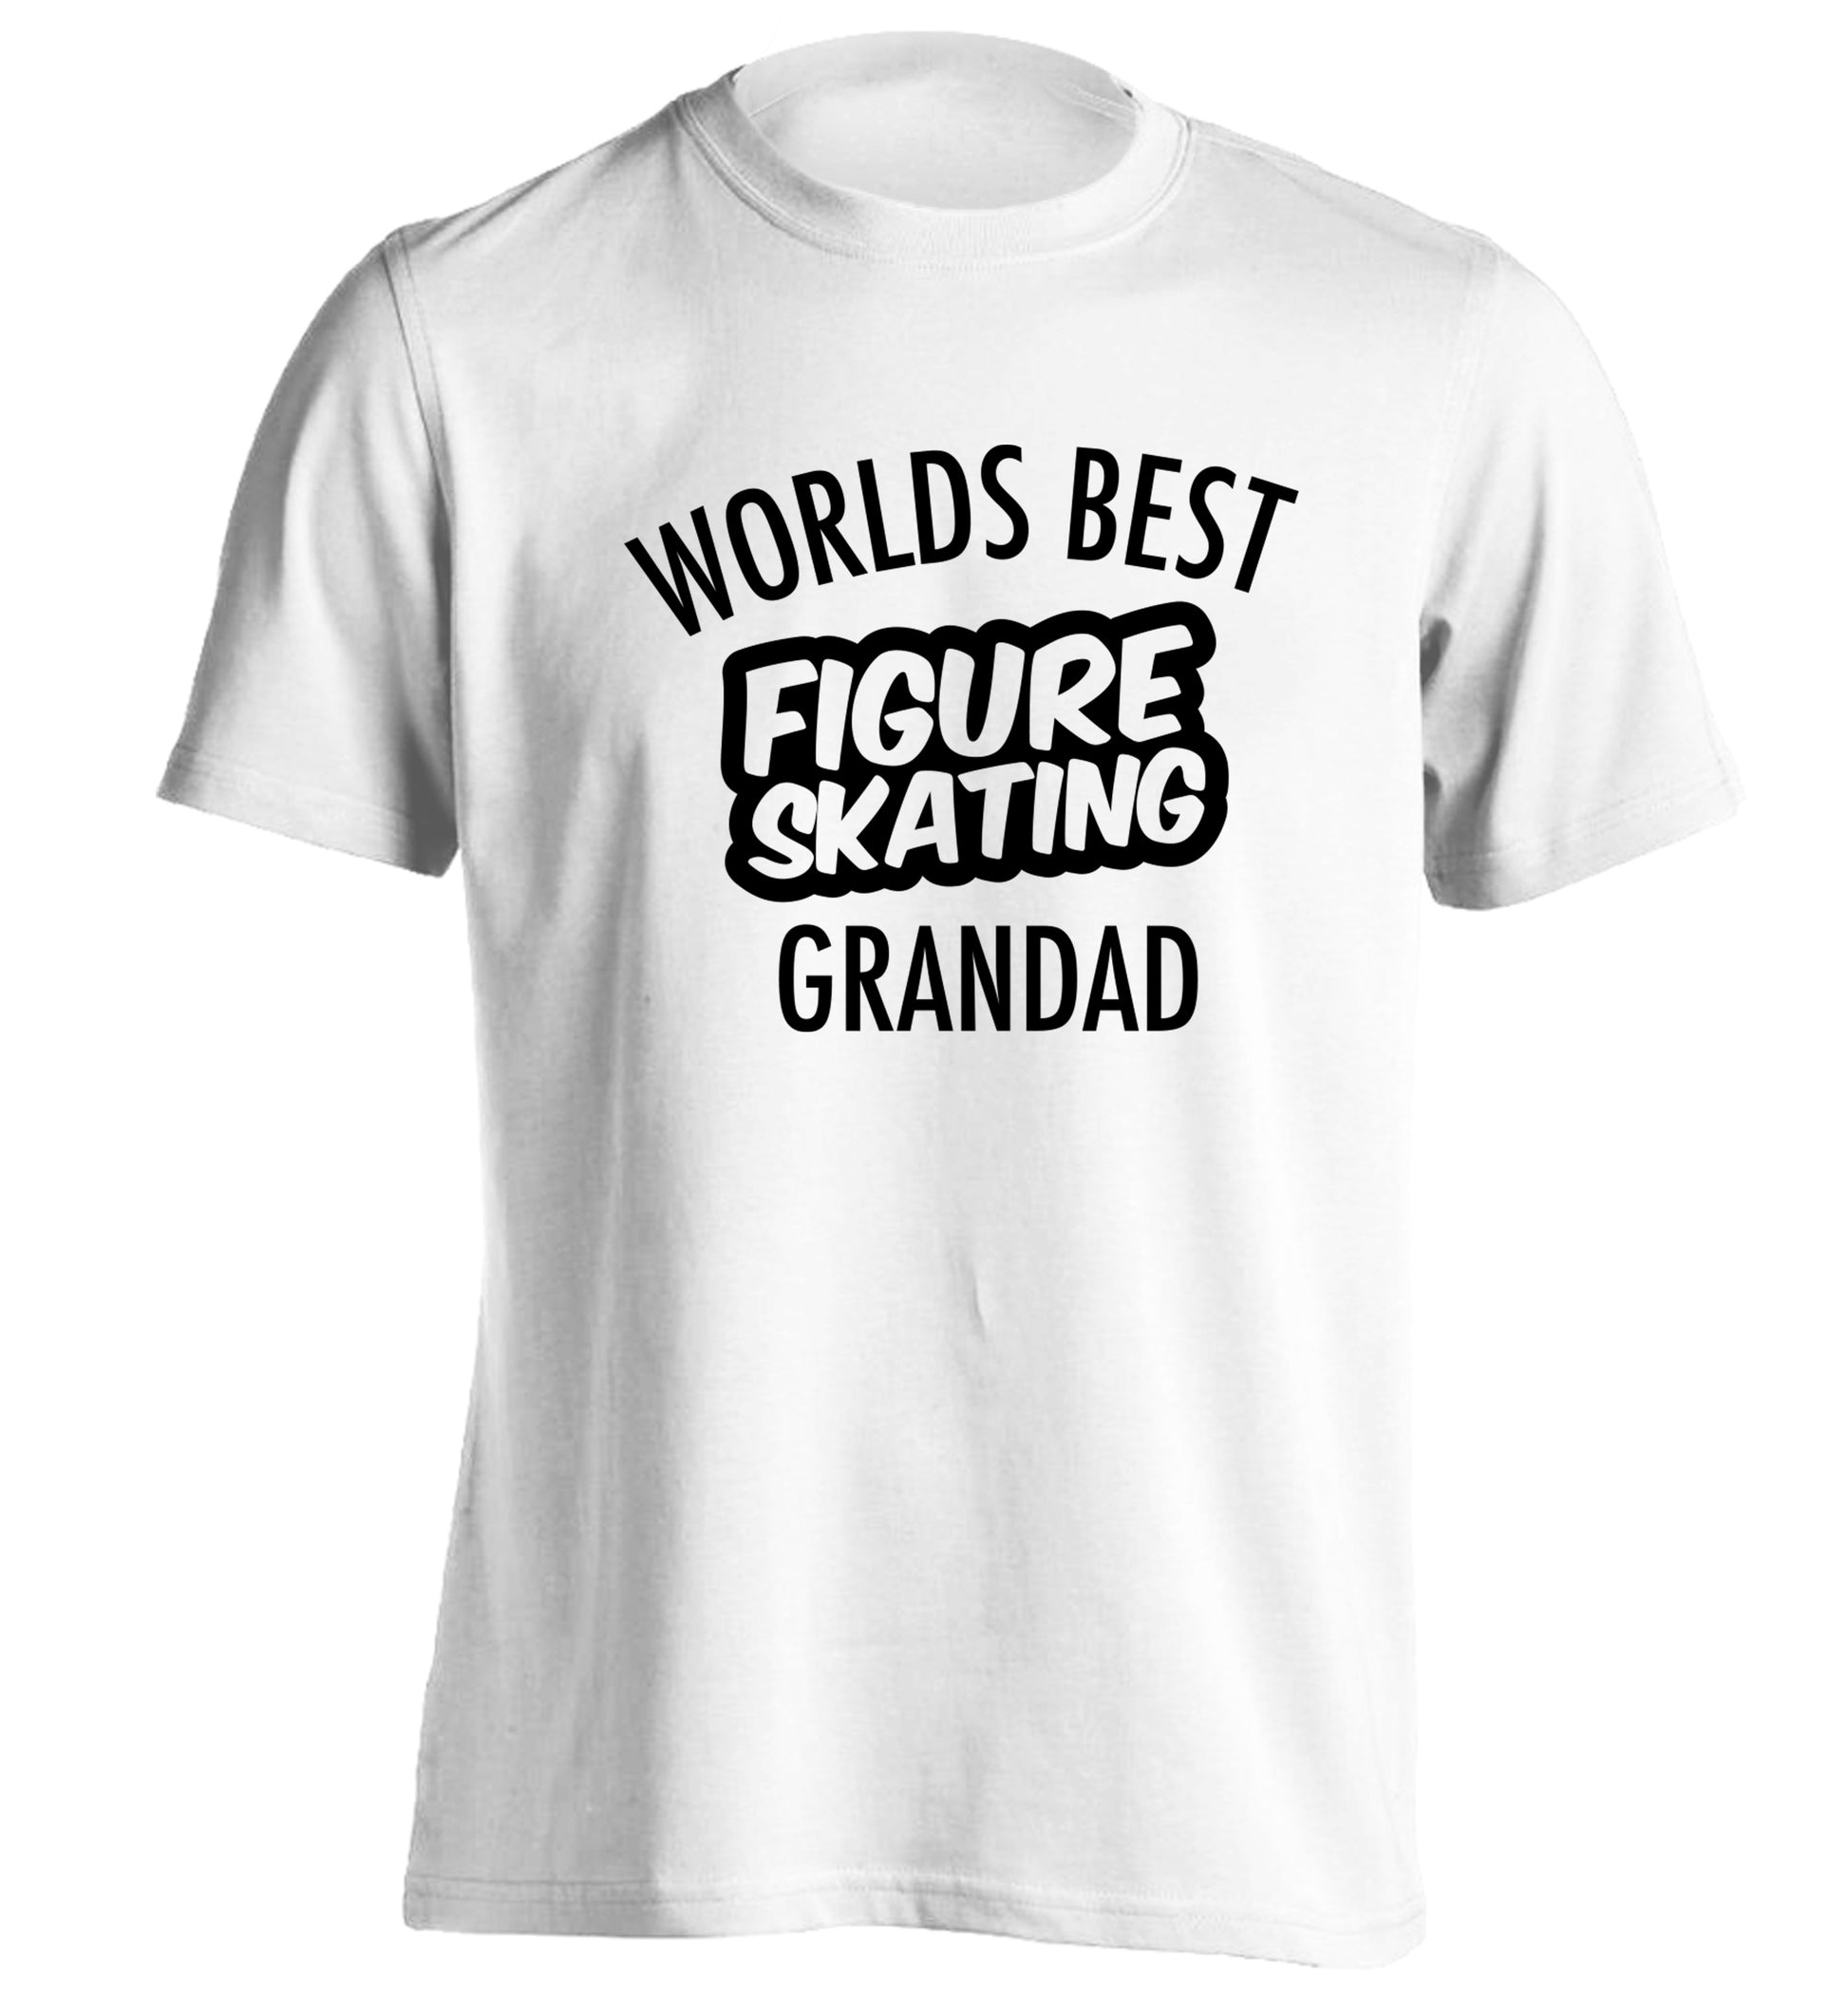 Worlds best figure skating grandad adults unisexwhite Tshirt 2XL